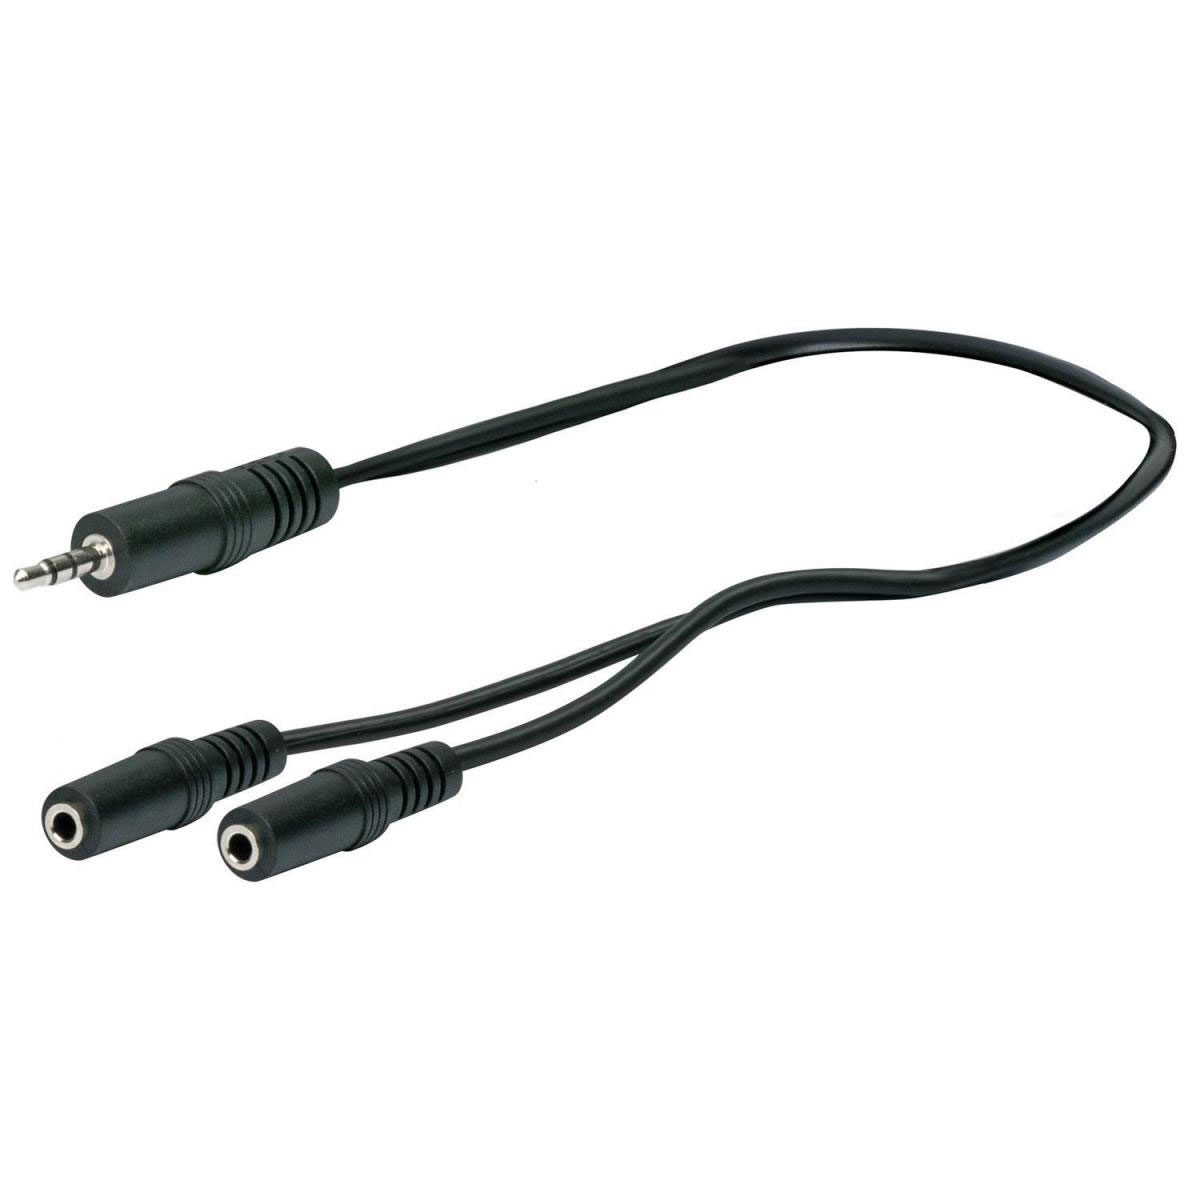 A-Audio-Adapterkabel, Stereo, schwarz